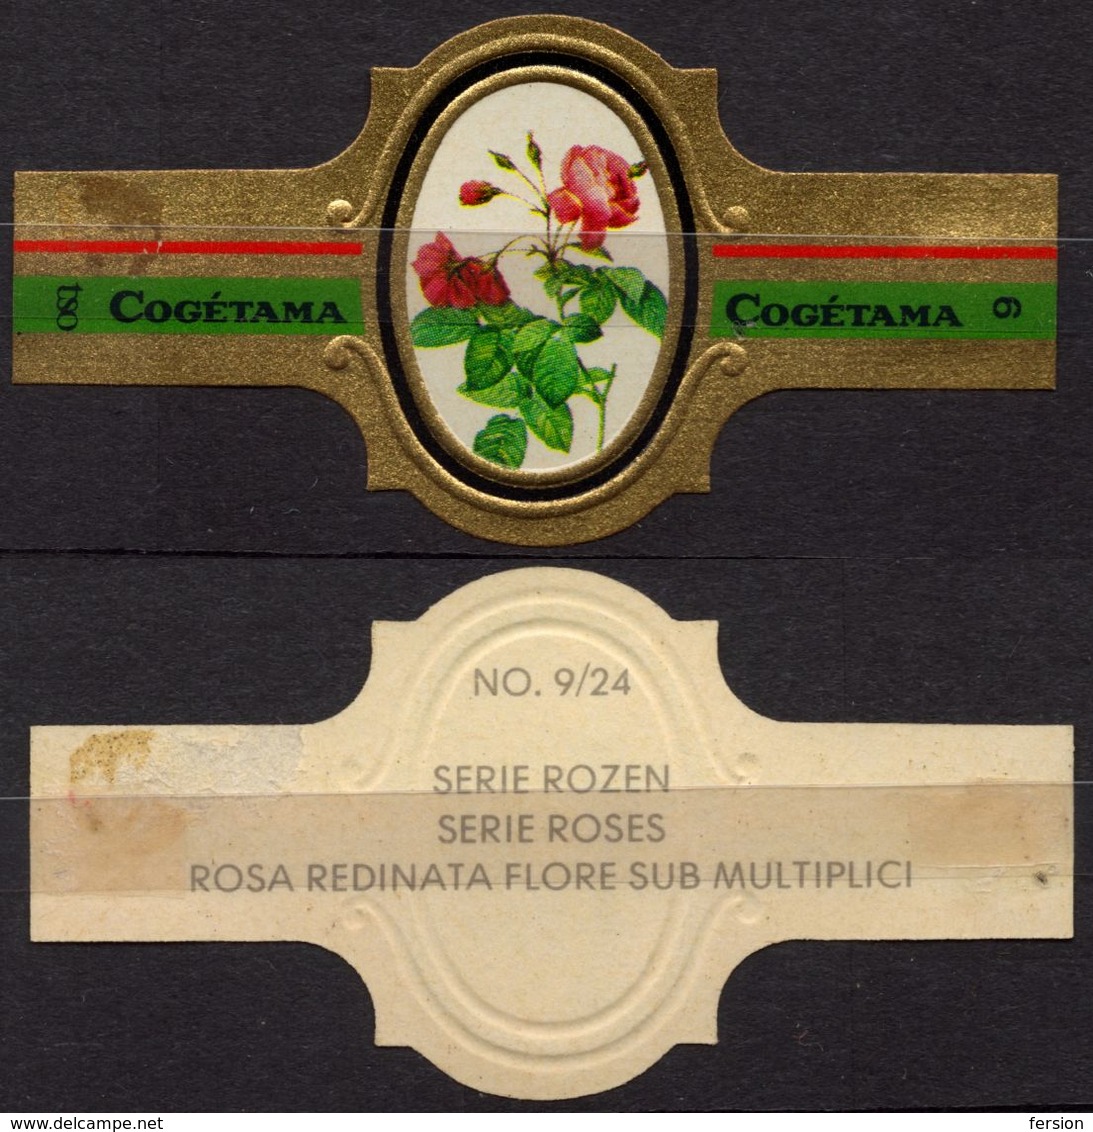 Redinata Flore Sub Multiplici - ROSE ROSES - Netherlands Holland / Cogétama / CIGAR CIGARS Label Vignette - Etiquetas